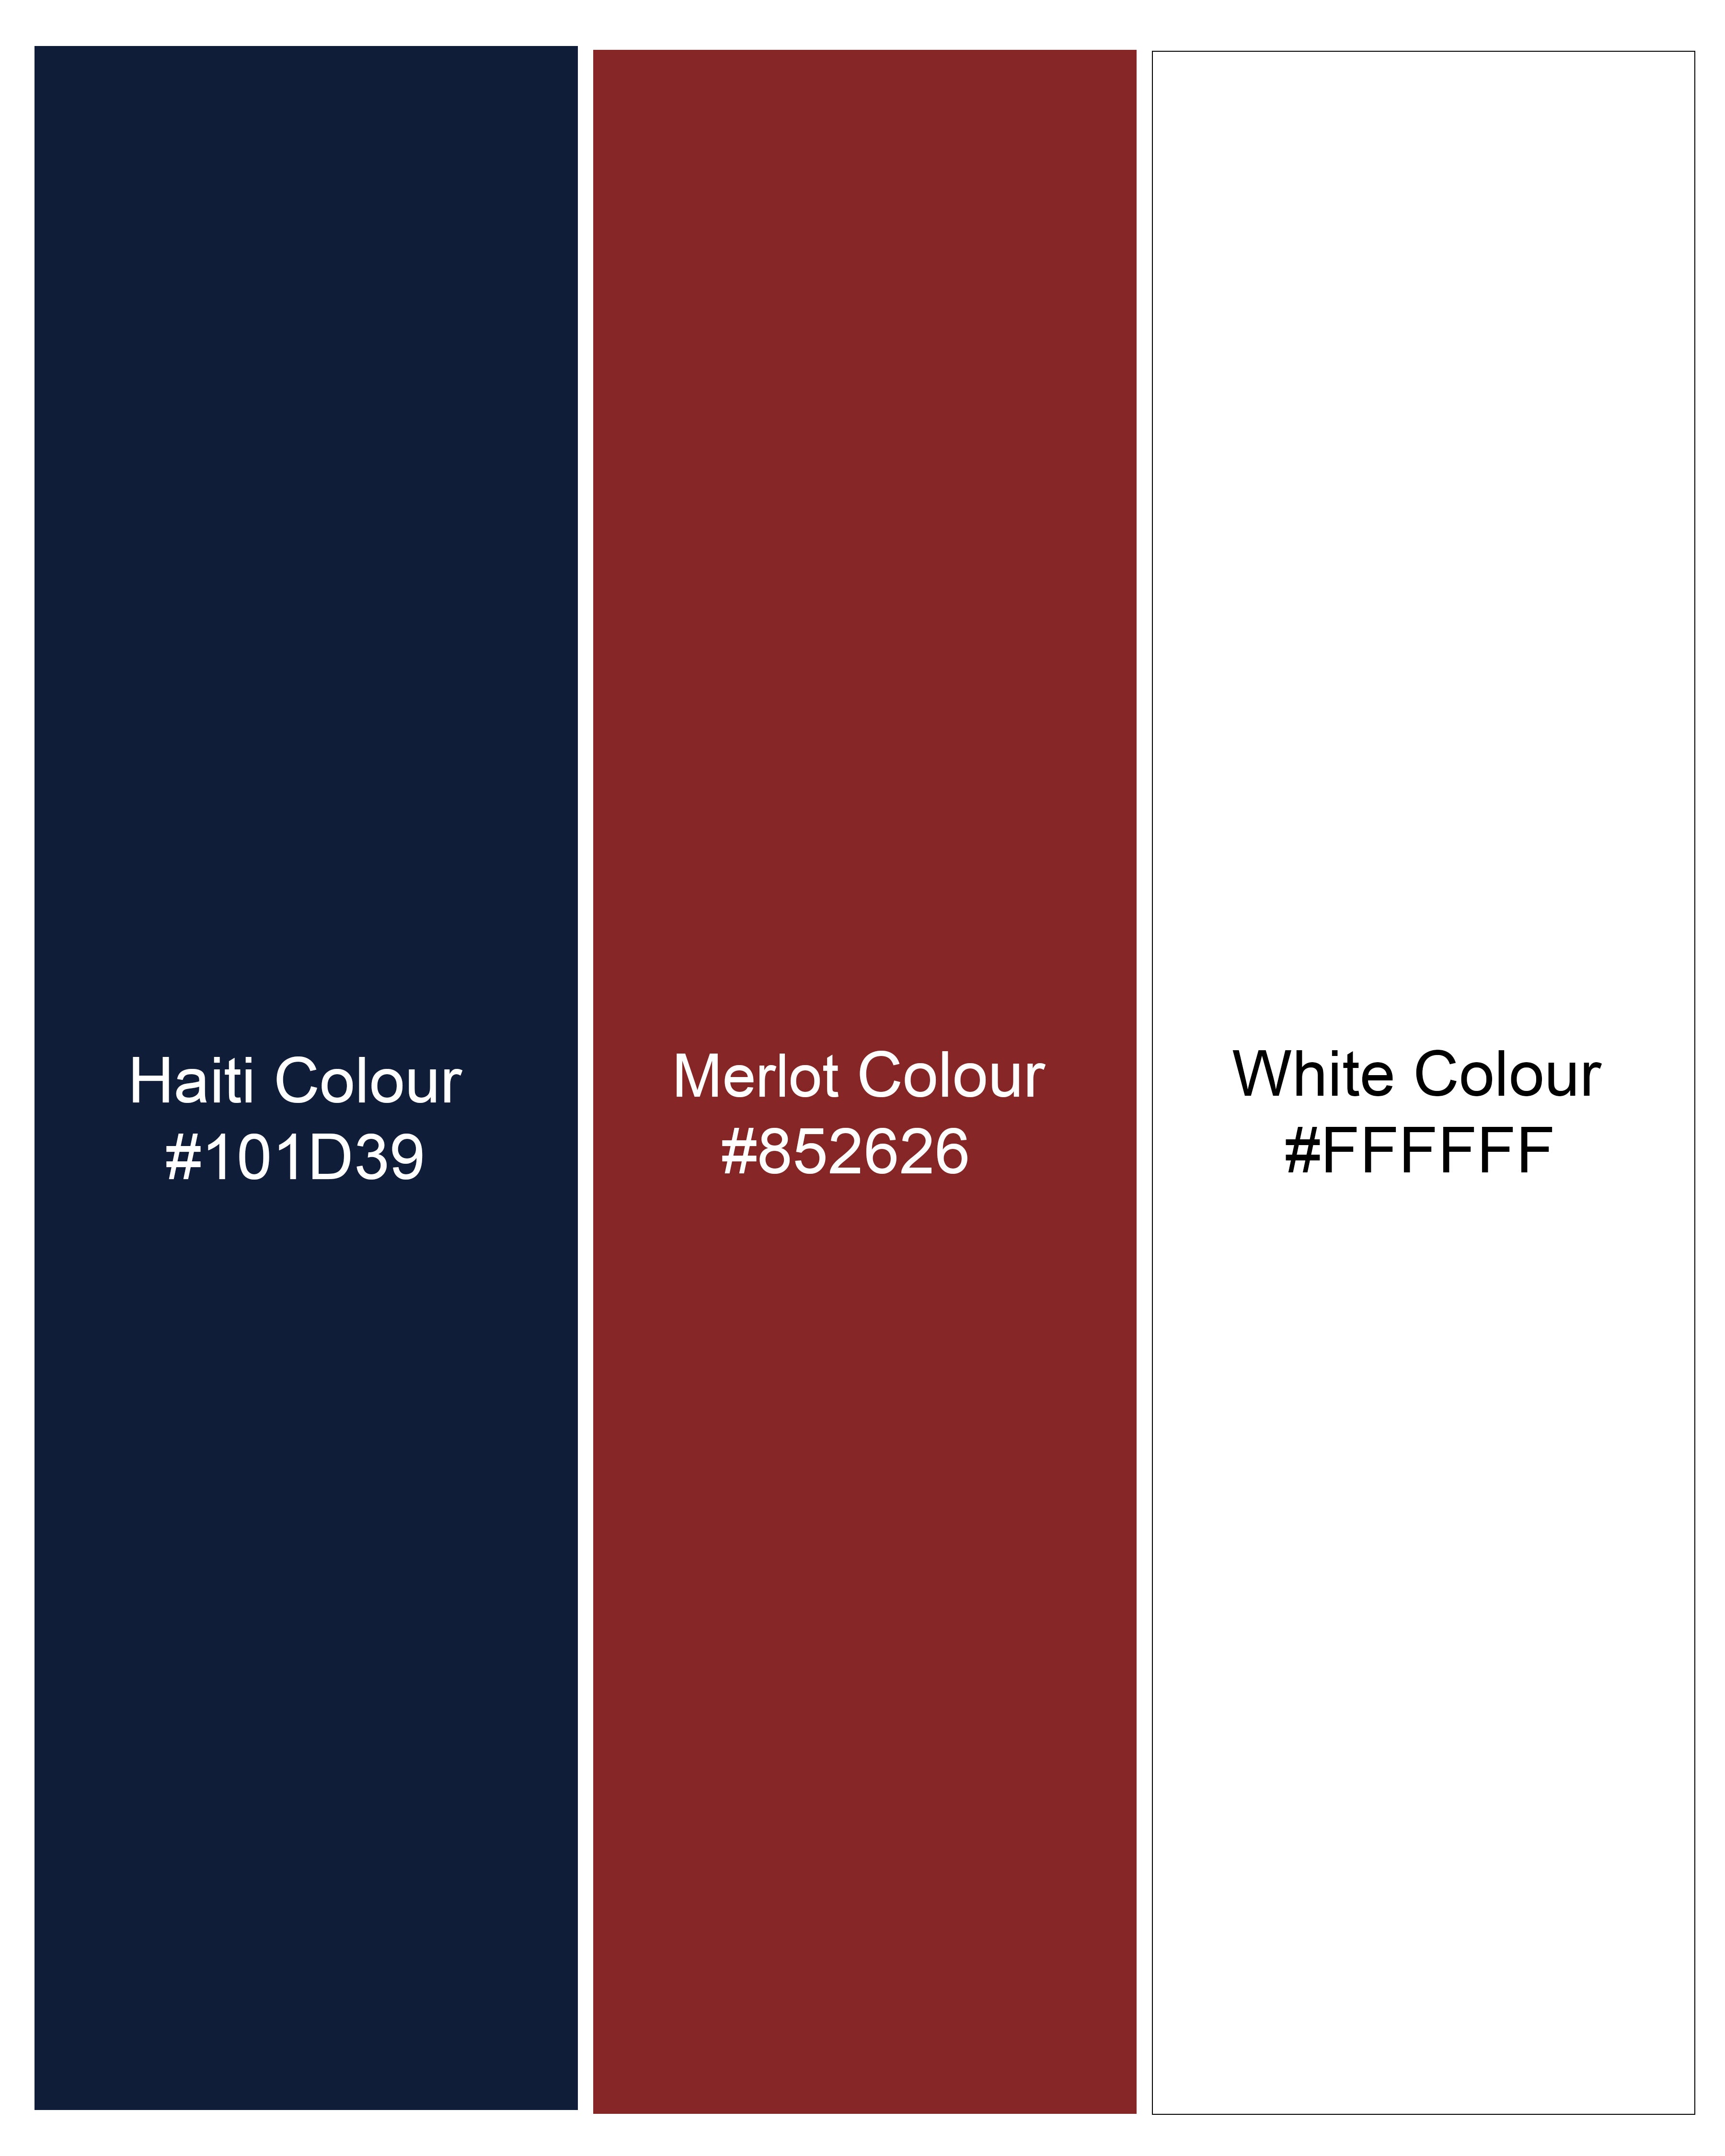 Merlot Red with Haiti Blue Windowpane Heavyweight Corduroy Shirt  8724-38,8724-H-38,8724-39,8724-H-39,8724-40,8724-H-40,8724-42,8724-H-42,8724-44,8724-H-44,8724-46,8724-H-46,8724-48,8724-H-48,8724-50,8724-H-50,8724-52,8724-H-52